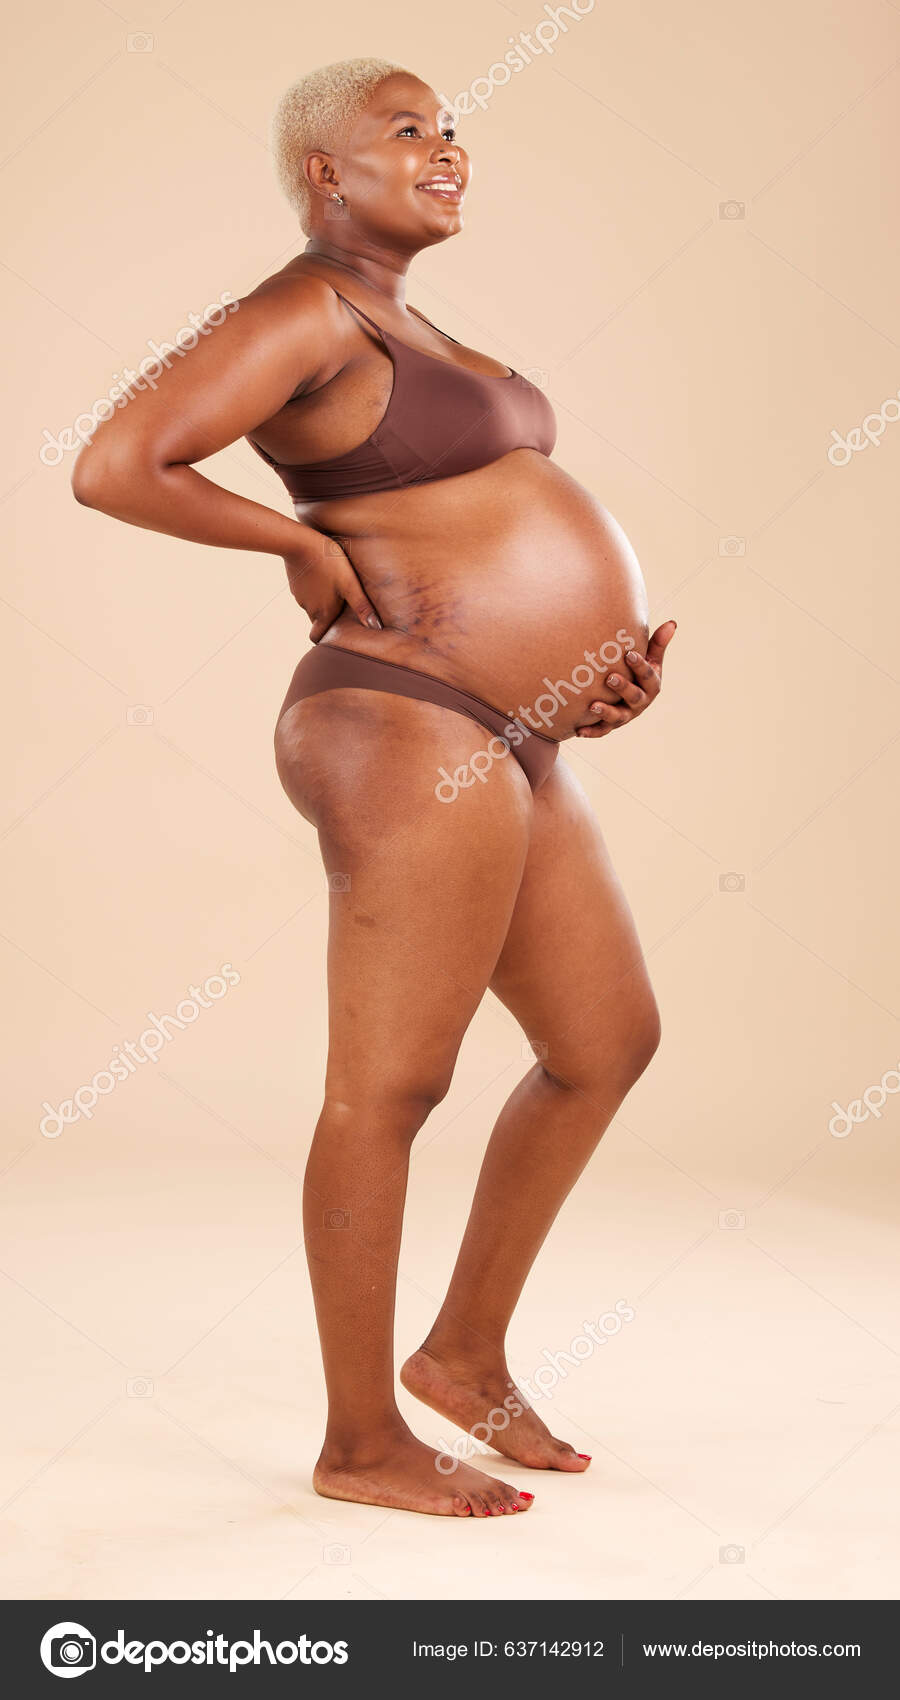 https://st5.depositphotos.com/62628780/63714/i/1600/depositphotos_637142912-stock-photo-happy-pregnancy-underwear-studio-woman.jpg